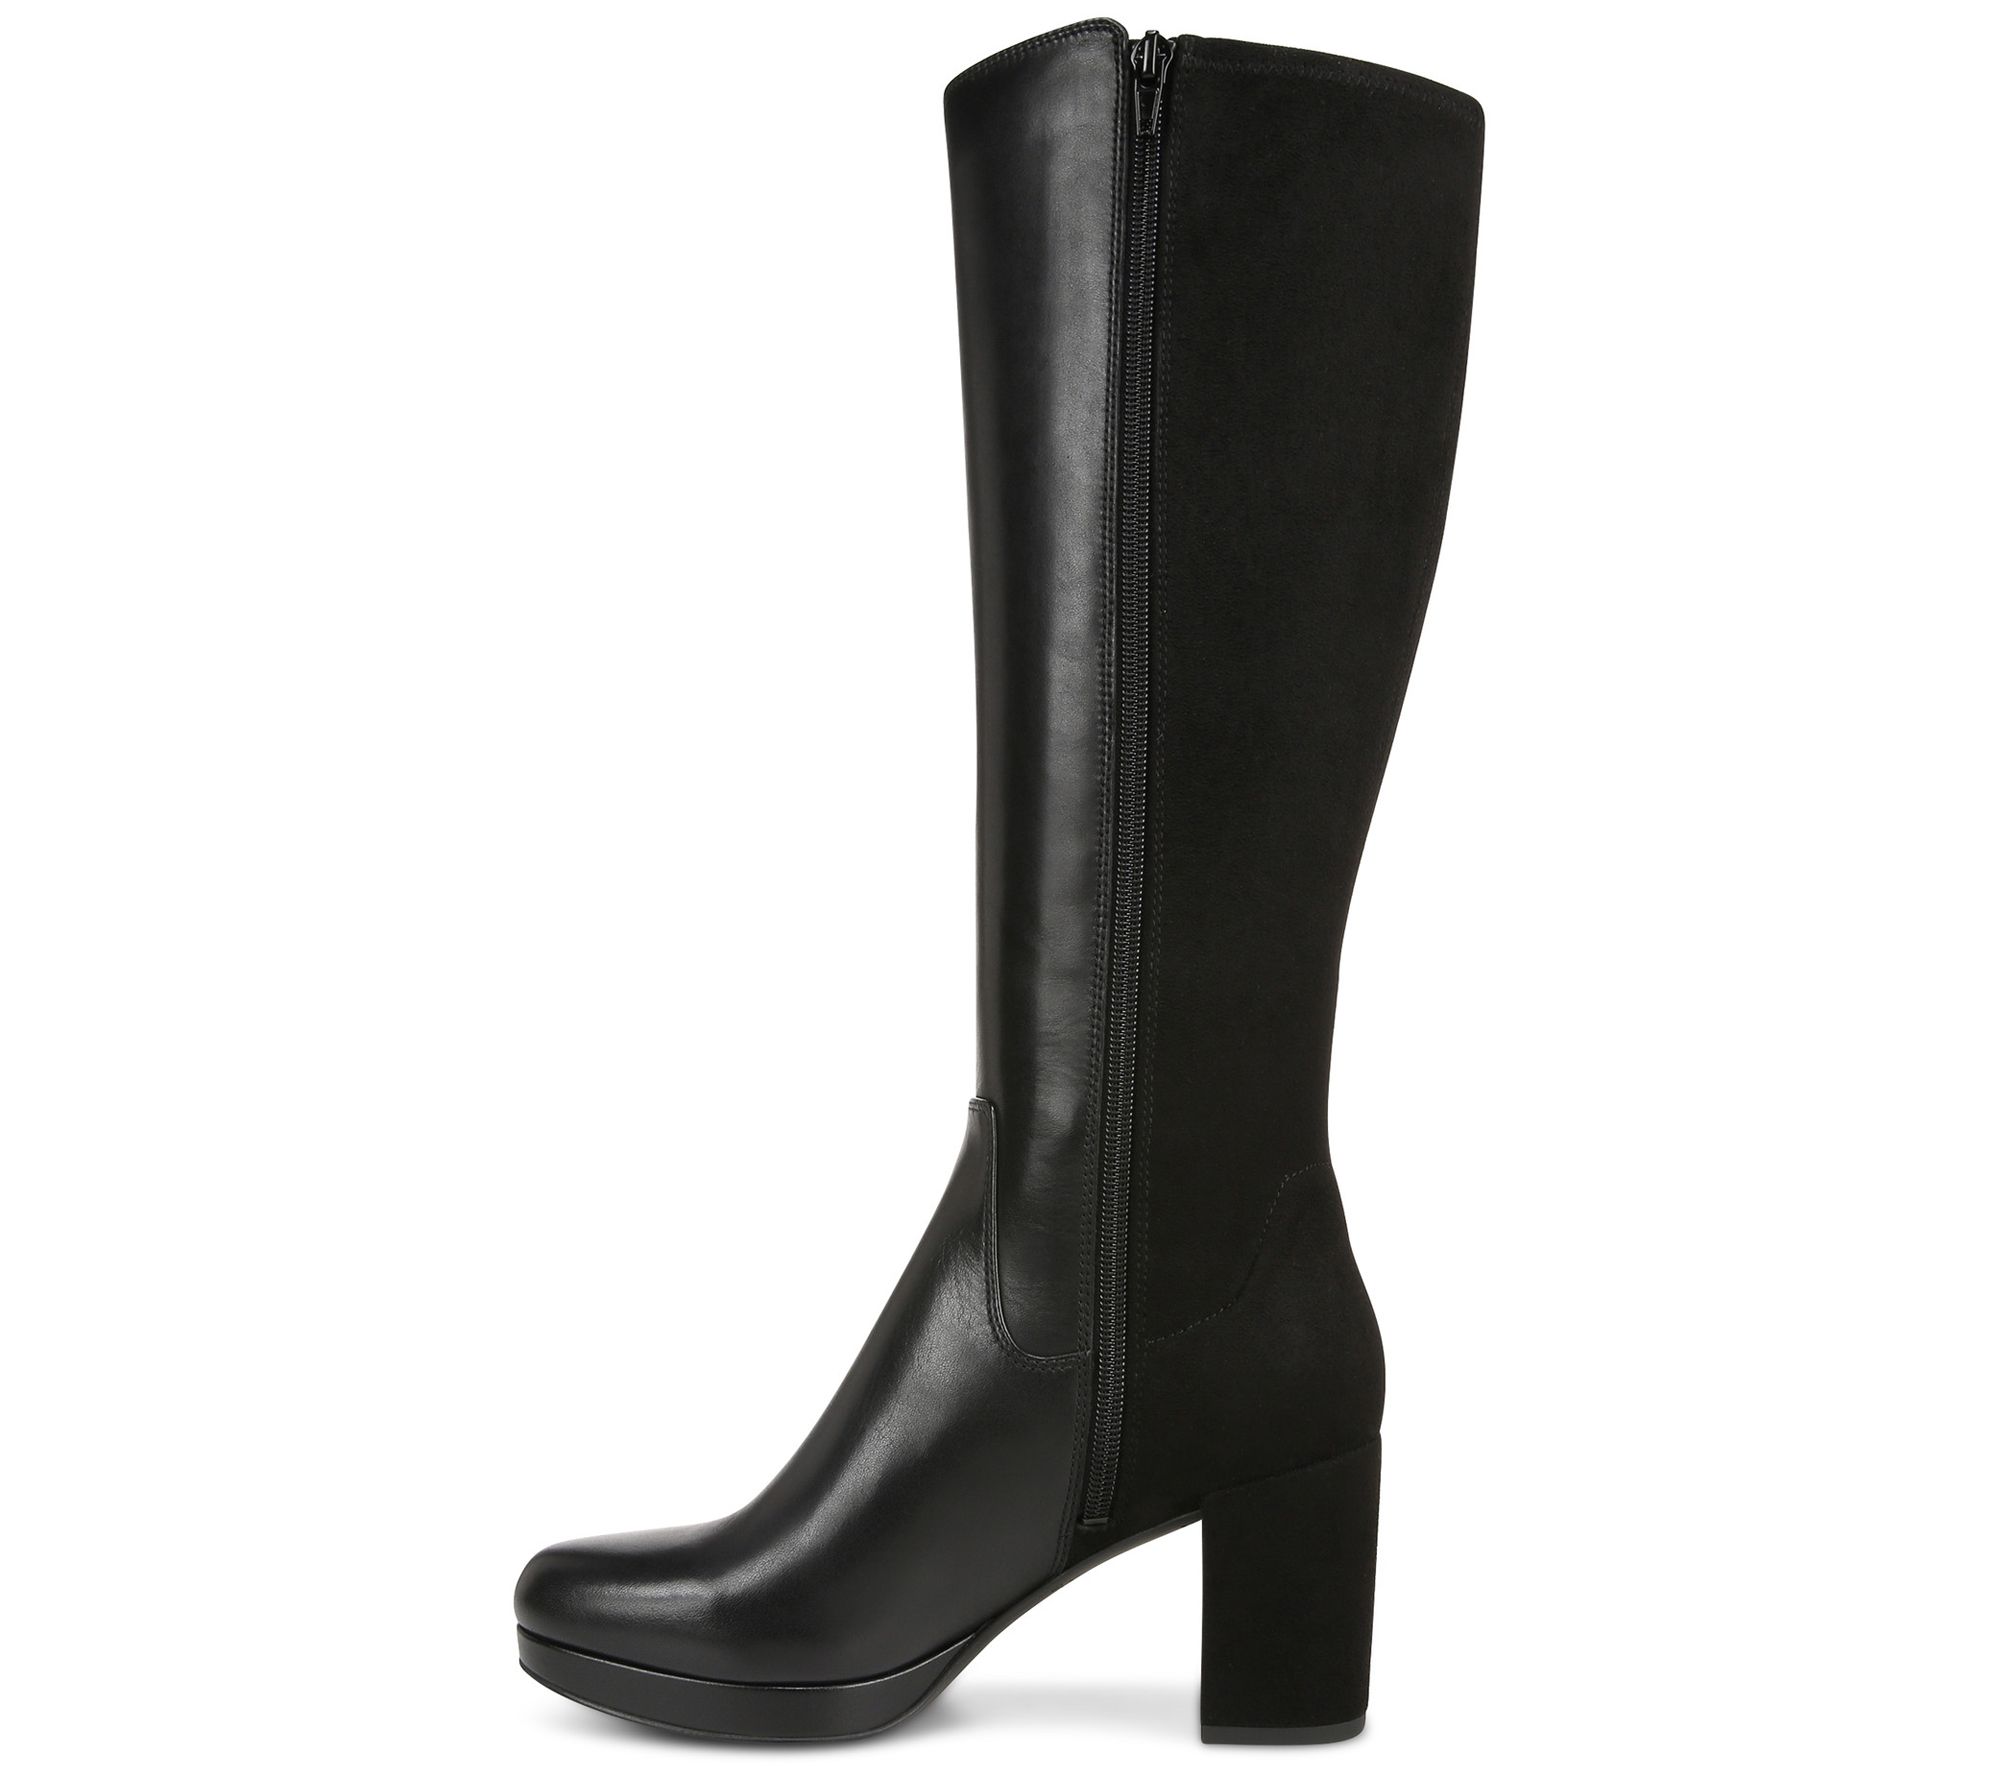 Vionic Leather & Stretch Tall Shaft Boots - Ynez - QVC.com